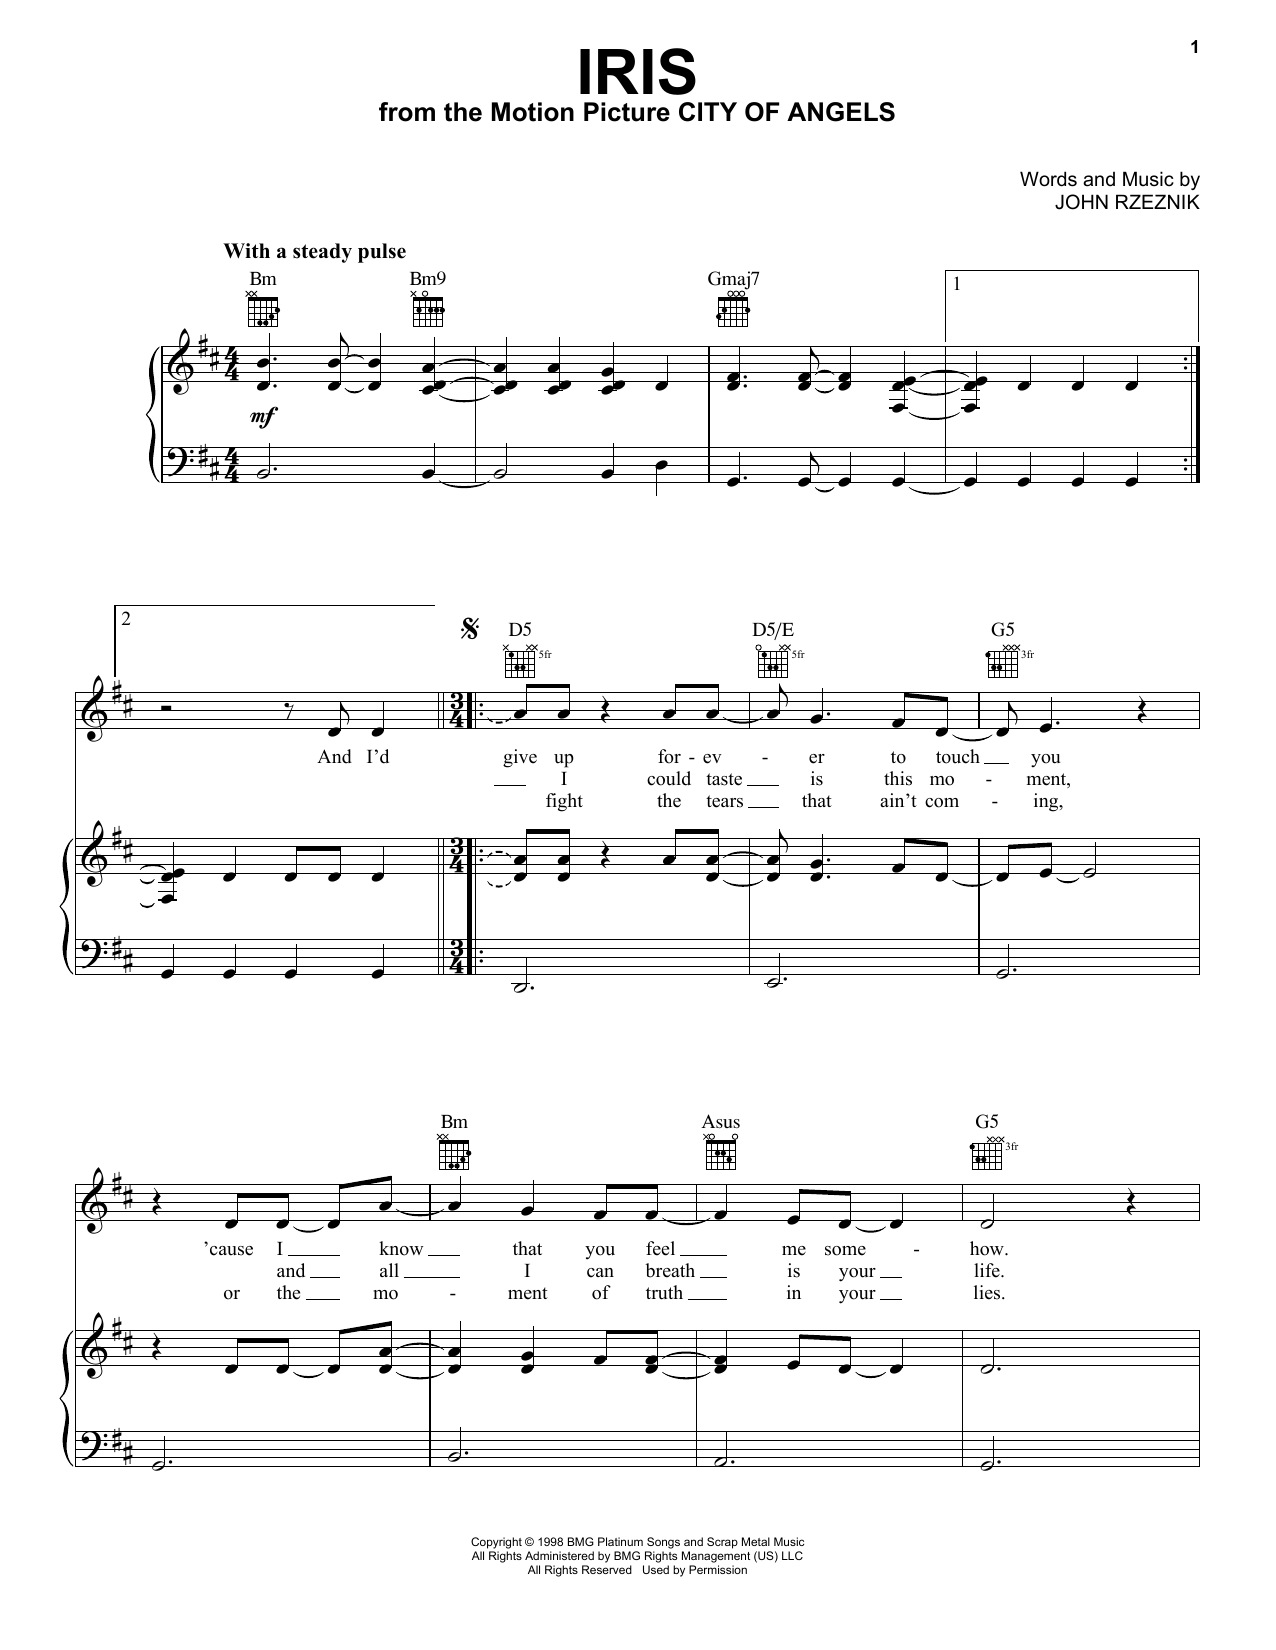 Goo Goo Dolls Iris Sheet Music Notes & Chords for Guitar Tab (Single Guitar) - Download or Print PDF